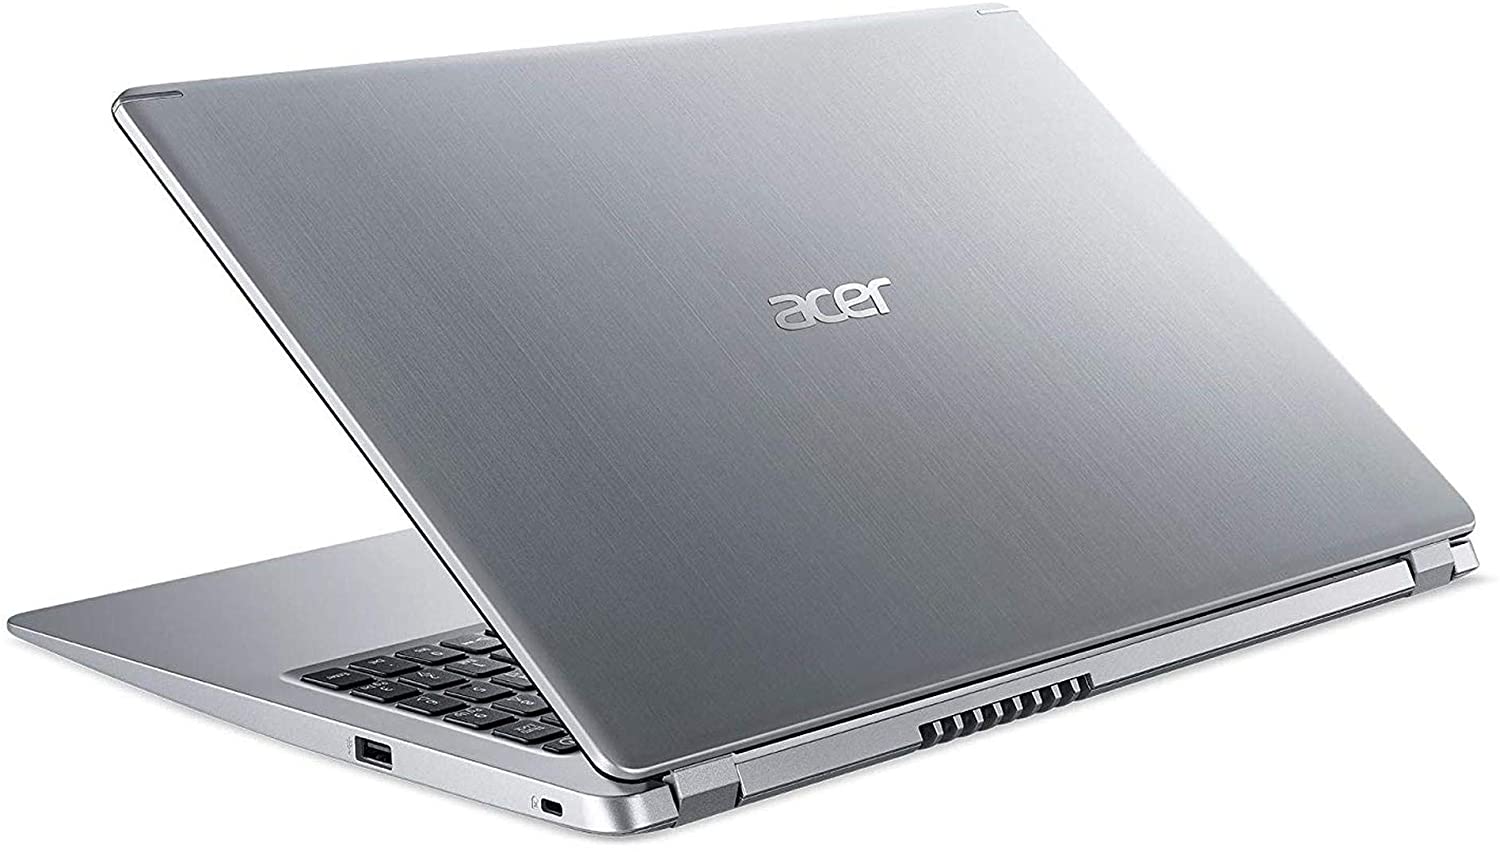 Acer Aspire 5 15.6" FHD Laptop Computer, AMD Ryzen 3 3200U Up to 3.5GHz (Beats i5-7200U), 4GB DDR4 RAM, 128GB PCIe SSD, 802.11ac WiFi, HDMI, Backlit Keyboard, Silver, Windows 10 Home in S Mode - image 5 of 6